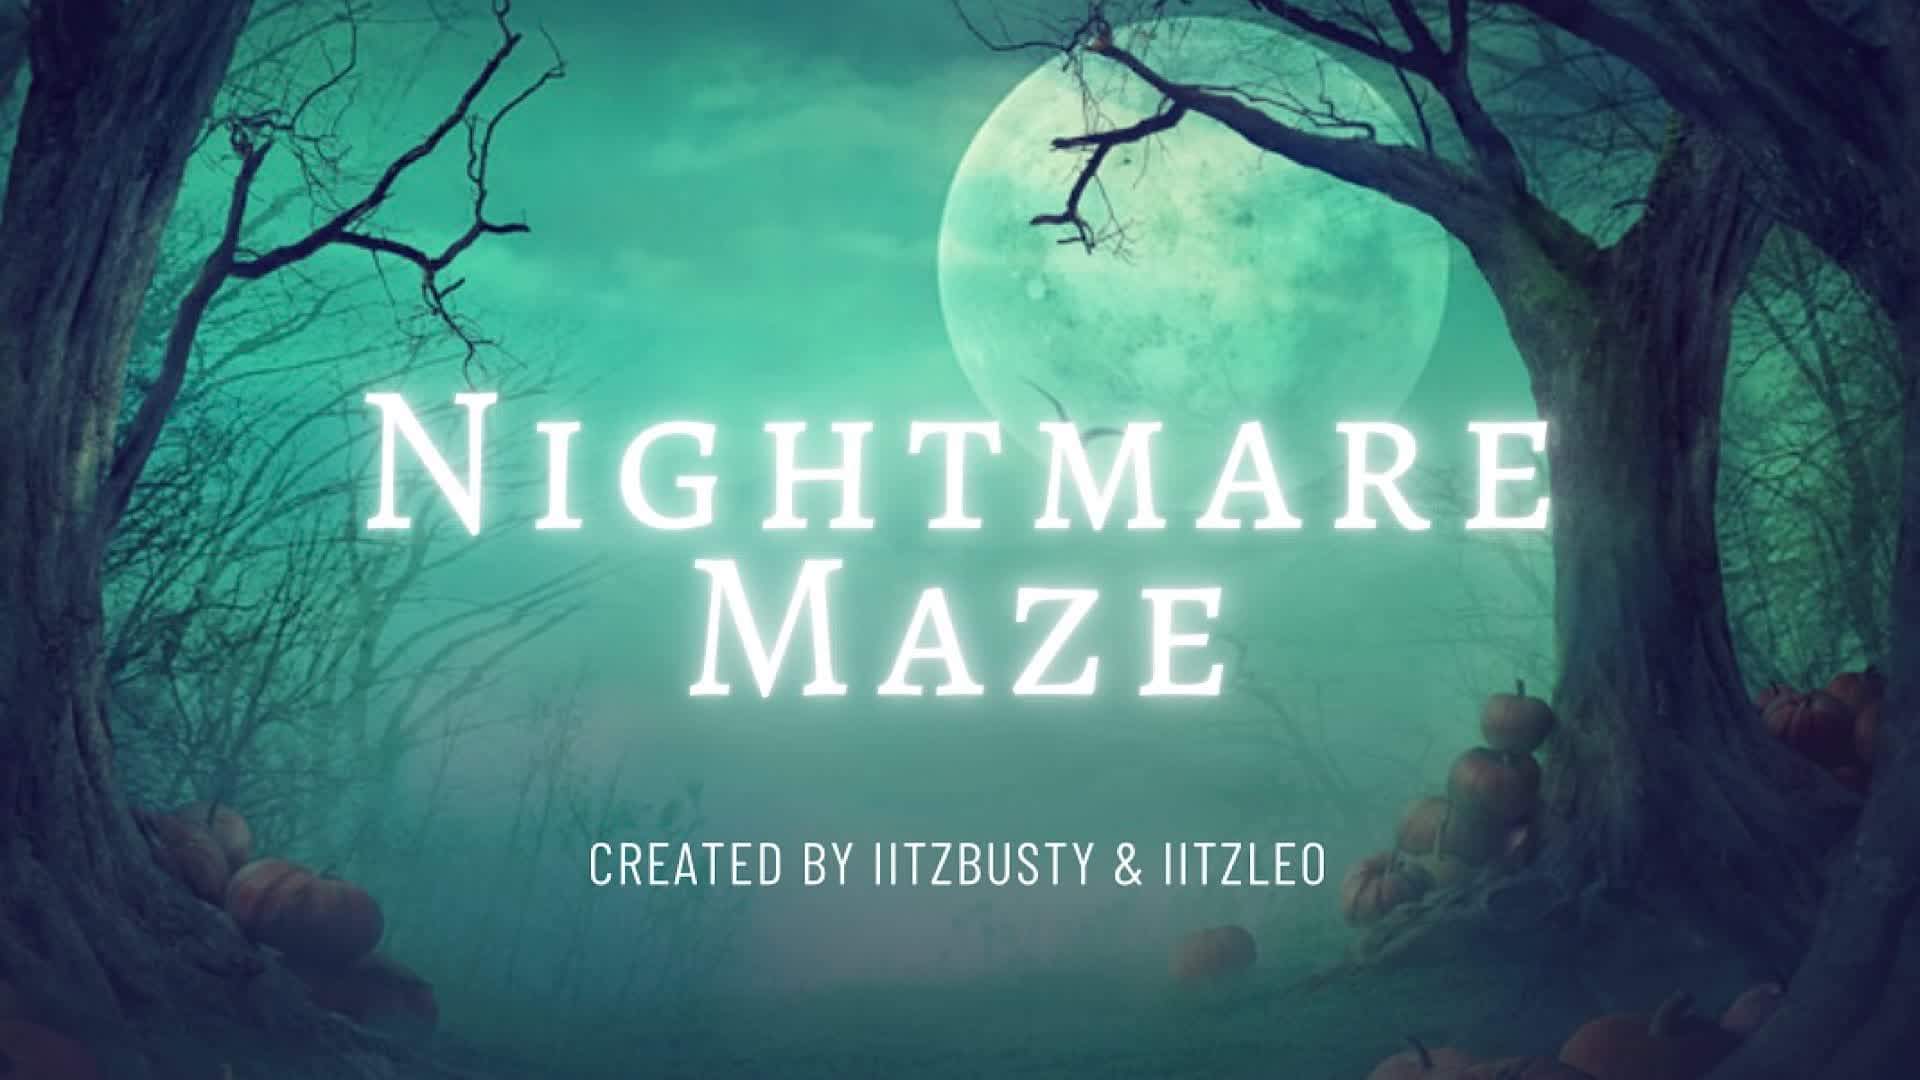 The Nightmare Maze